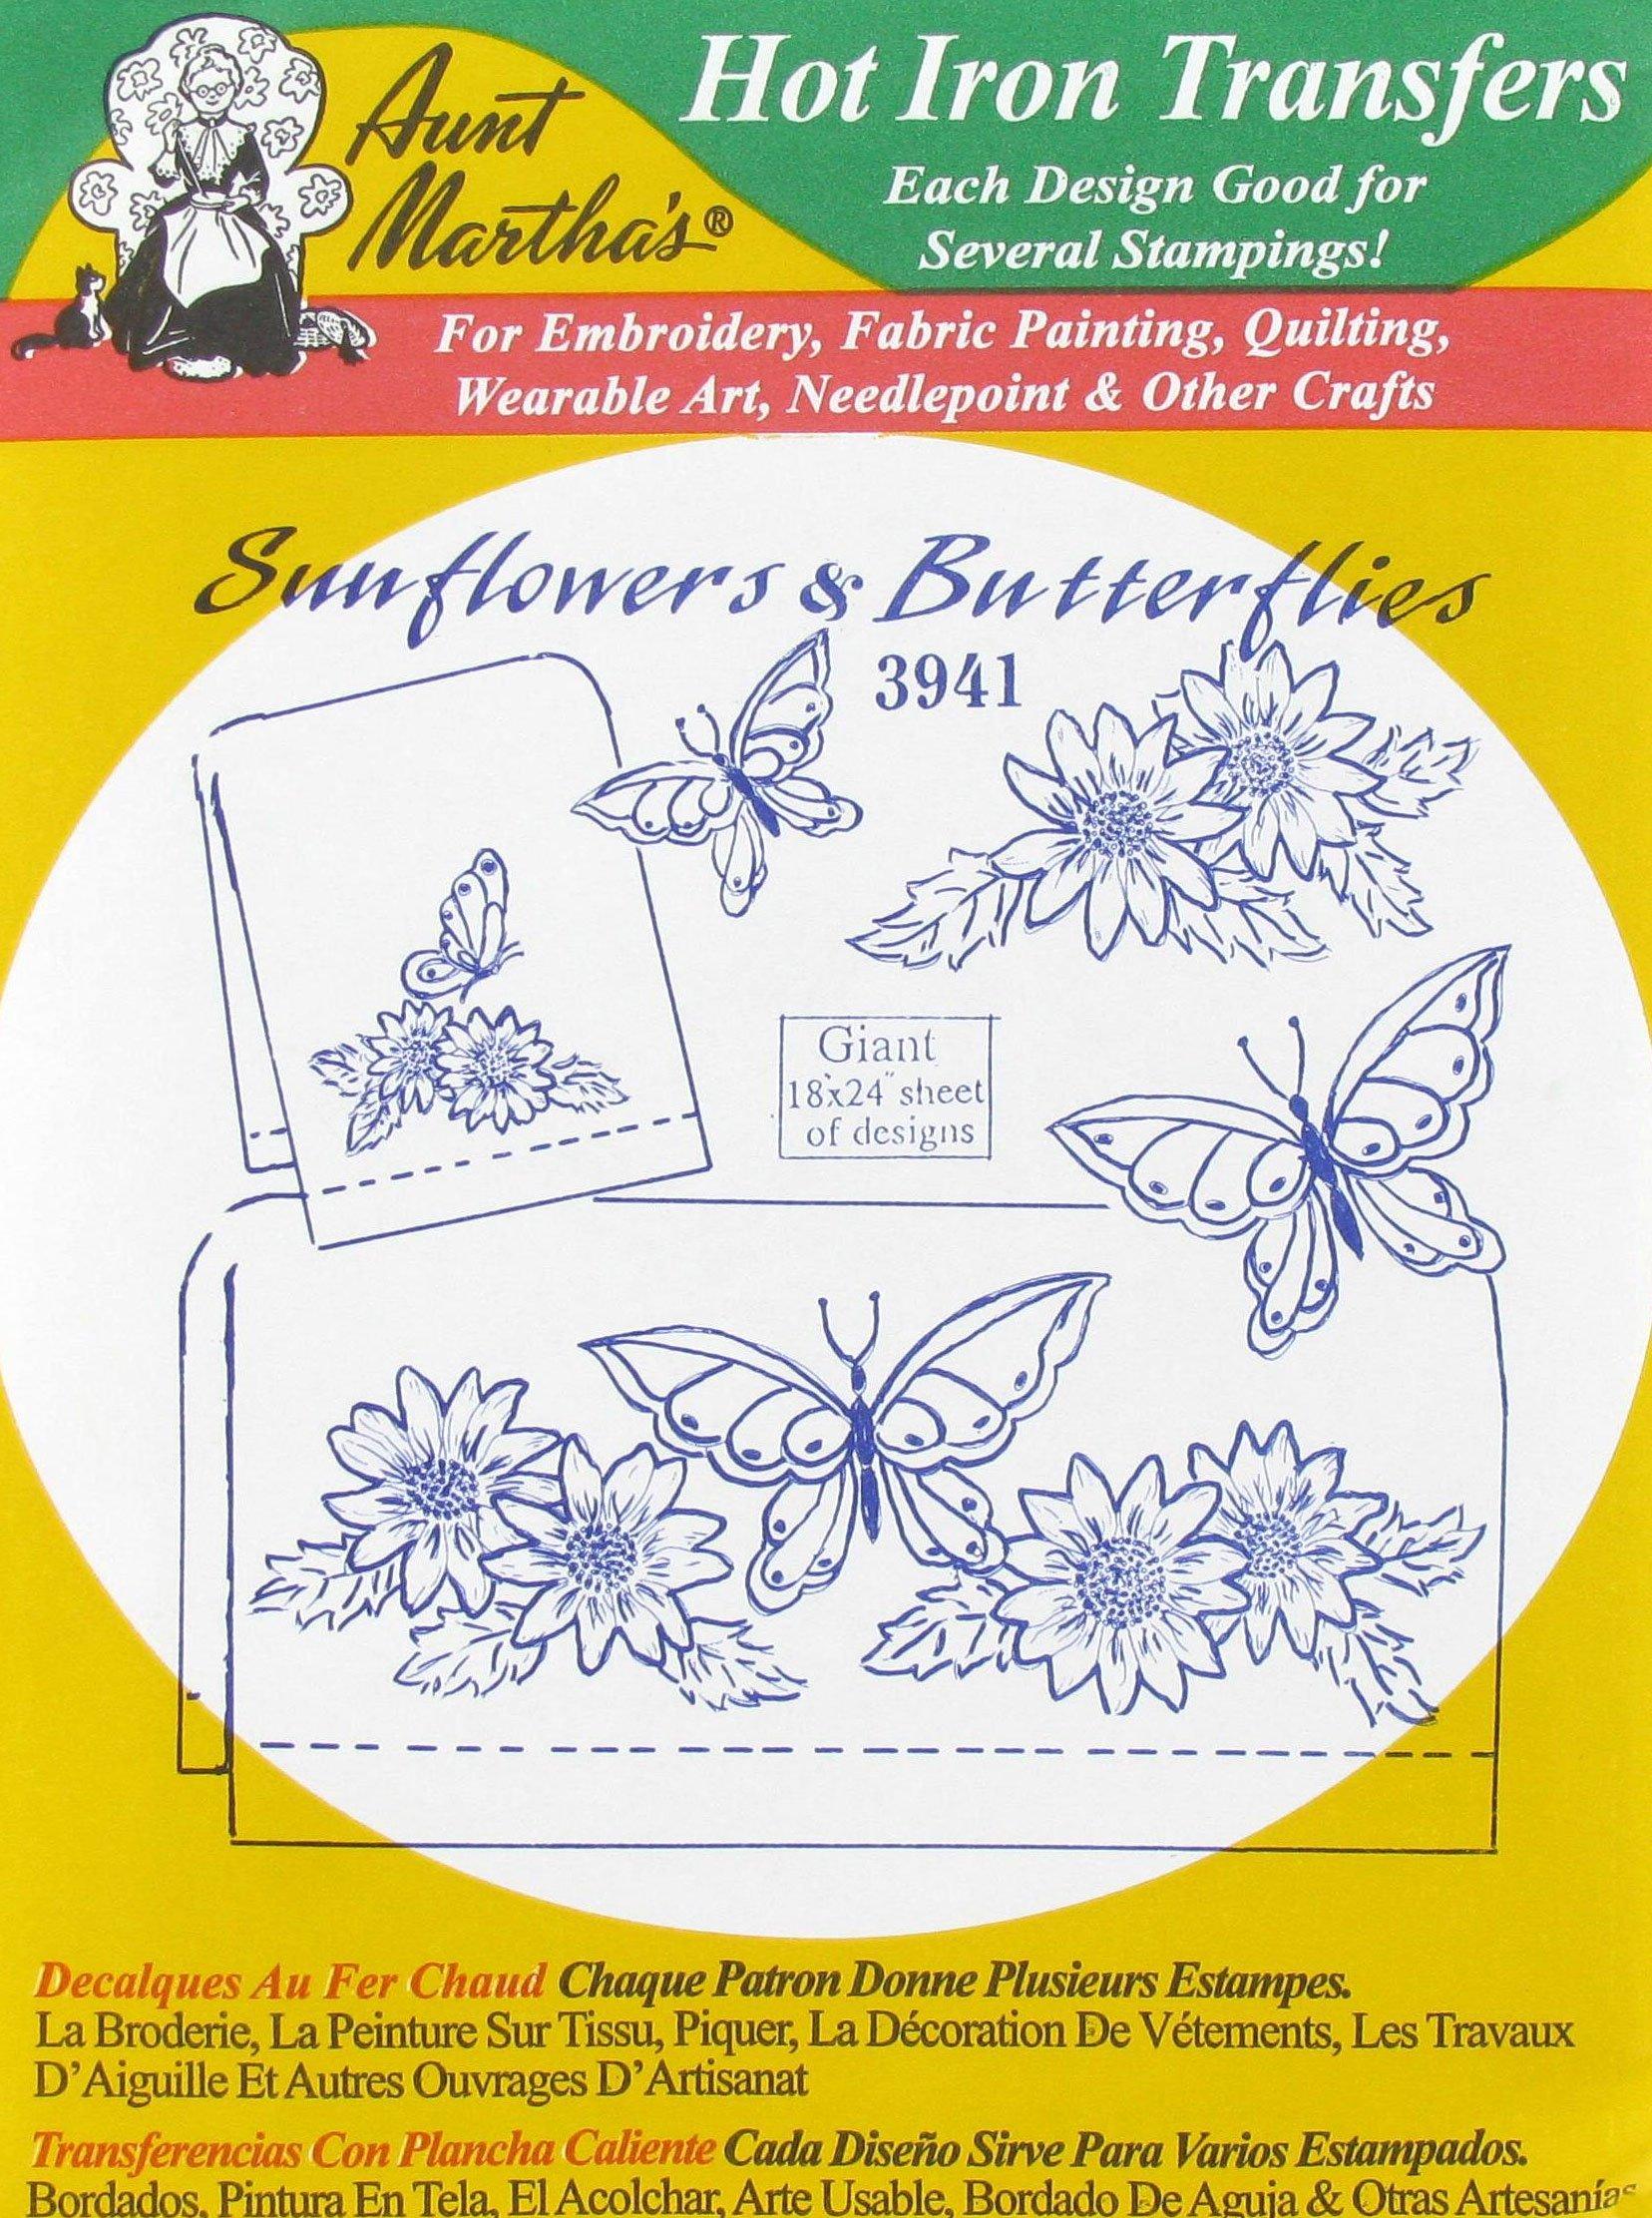 Wildflowers Embroidery Transfer Sheet, Hobby Lobby